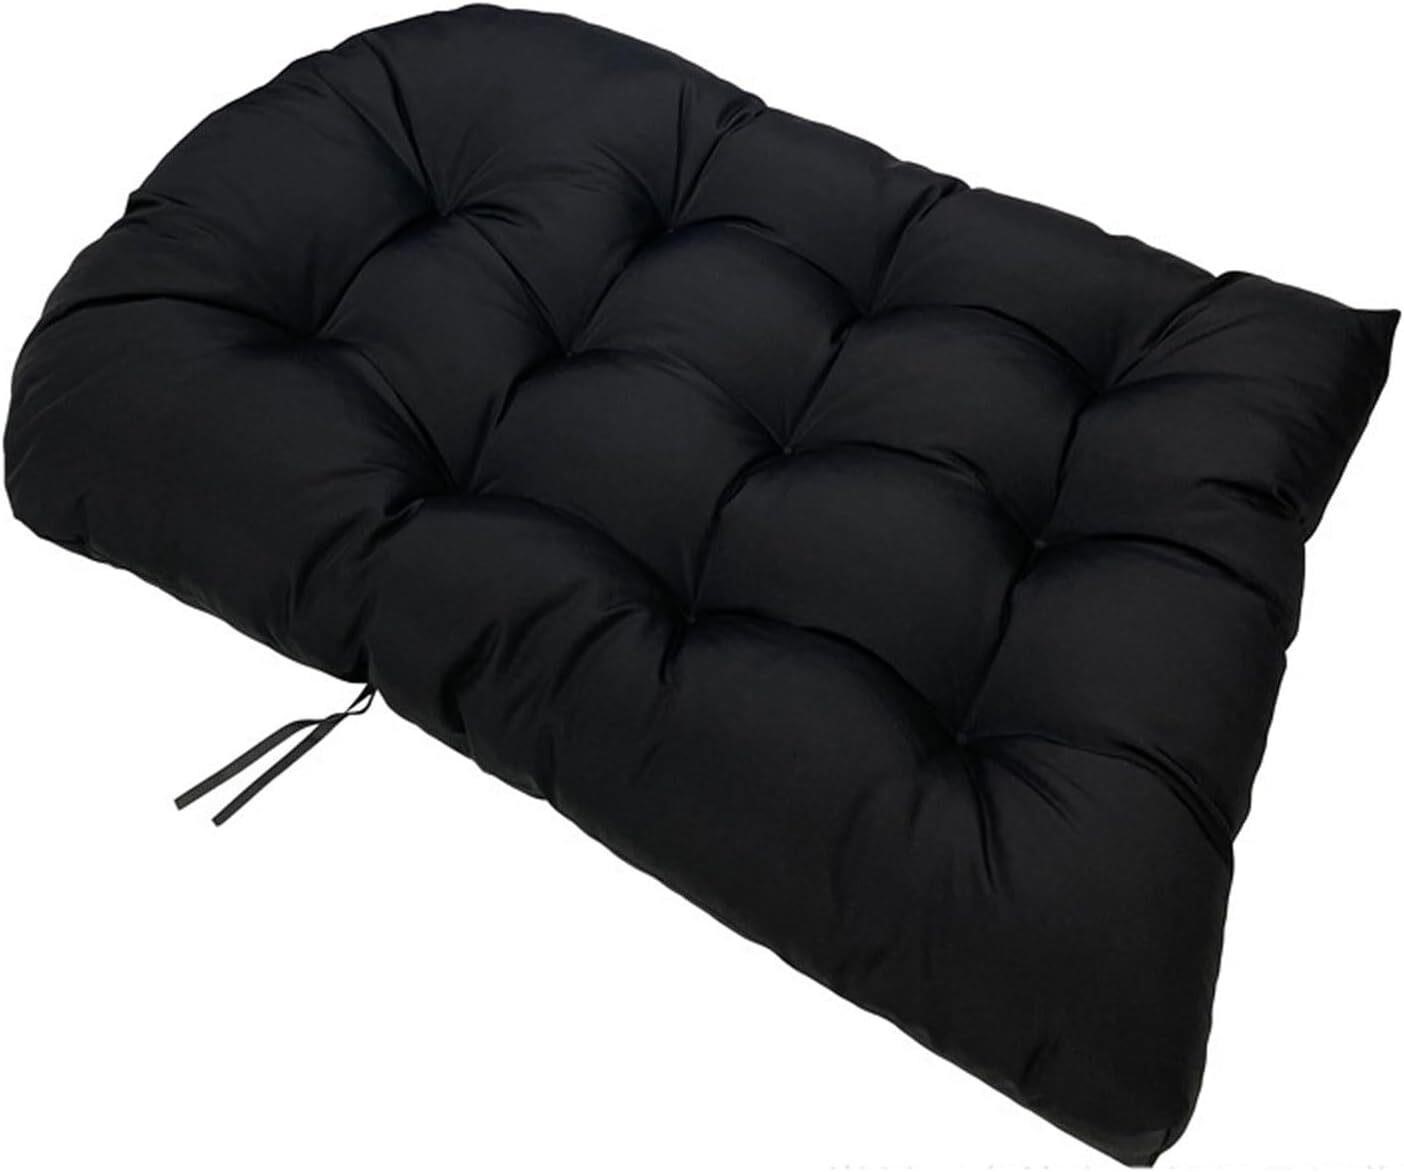 Hanging Egg Chair Cushion  Waterproof - Black